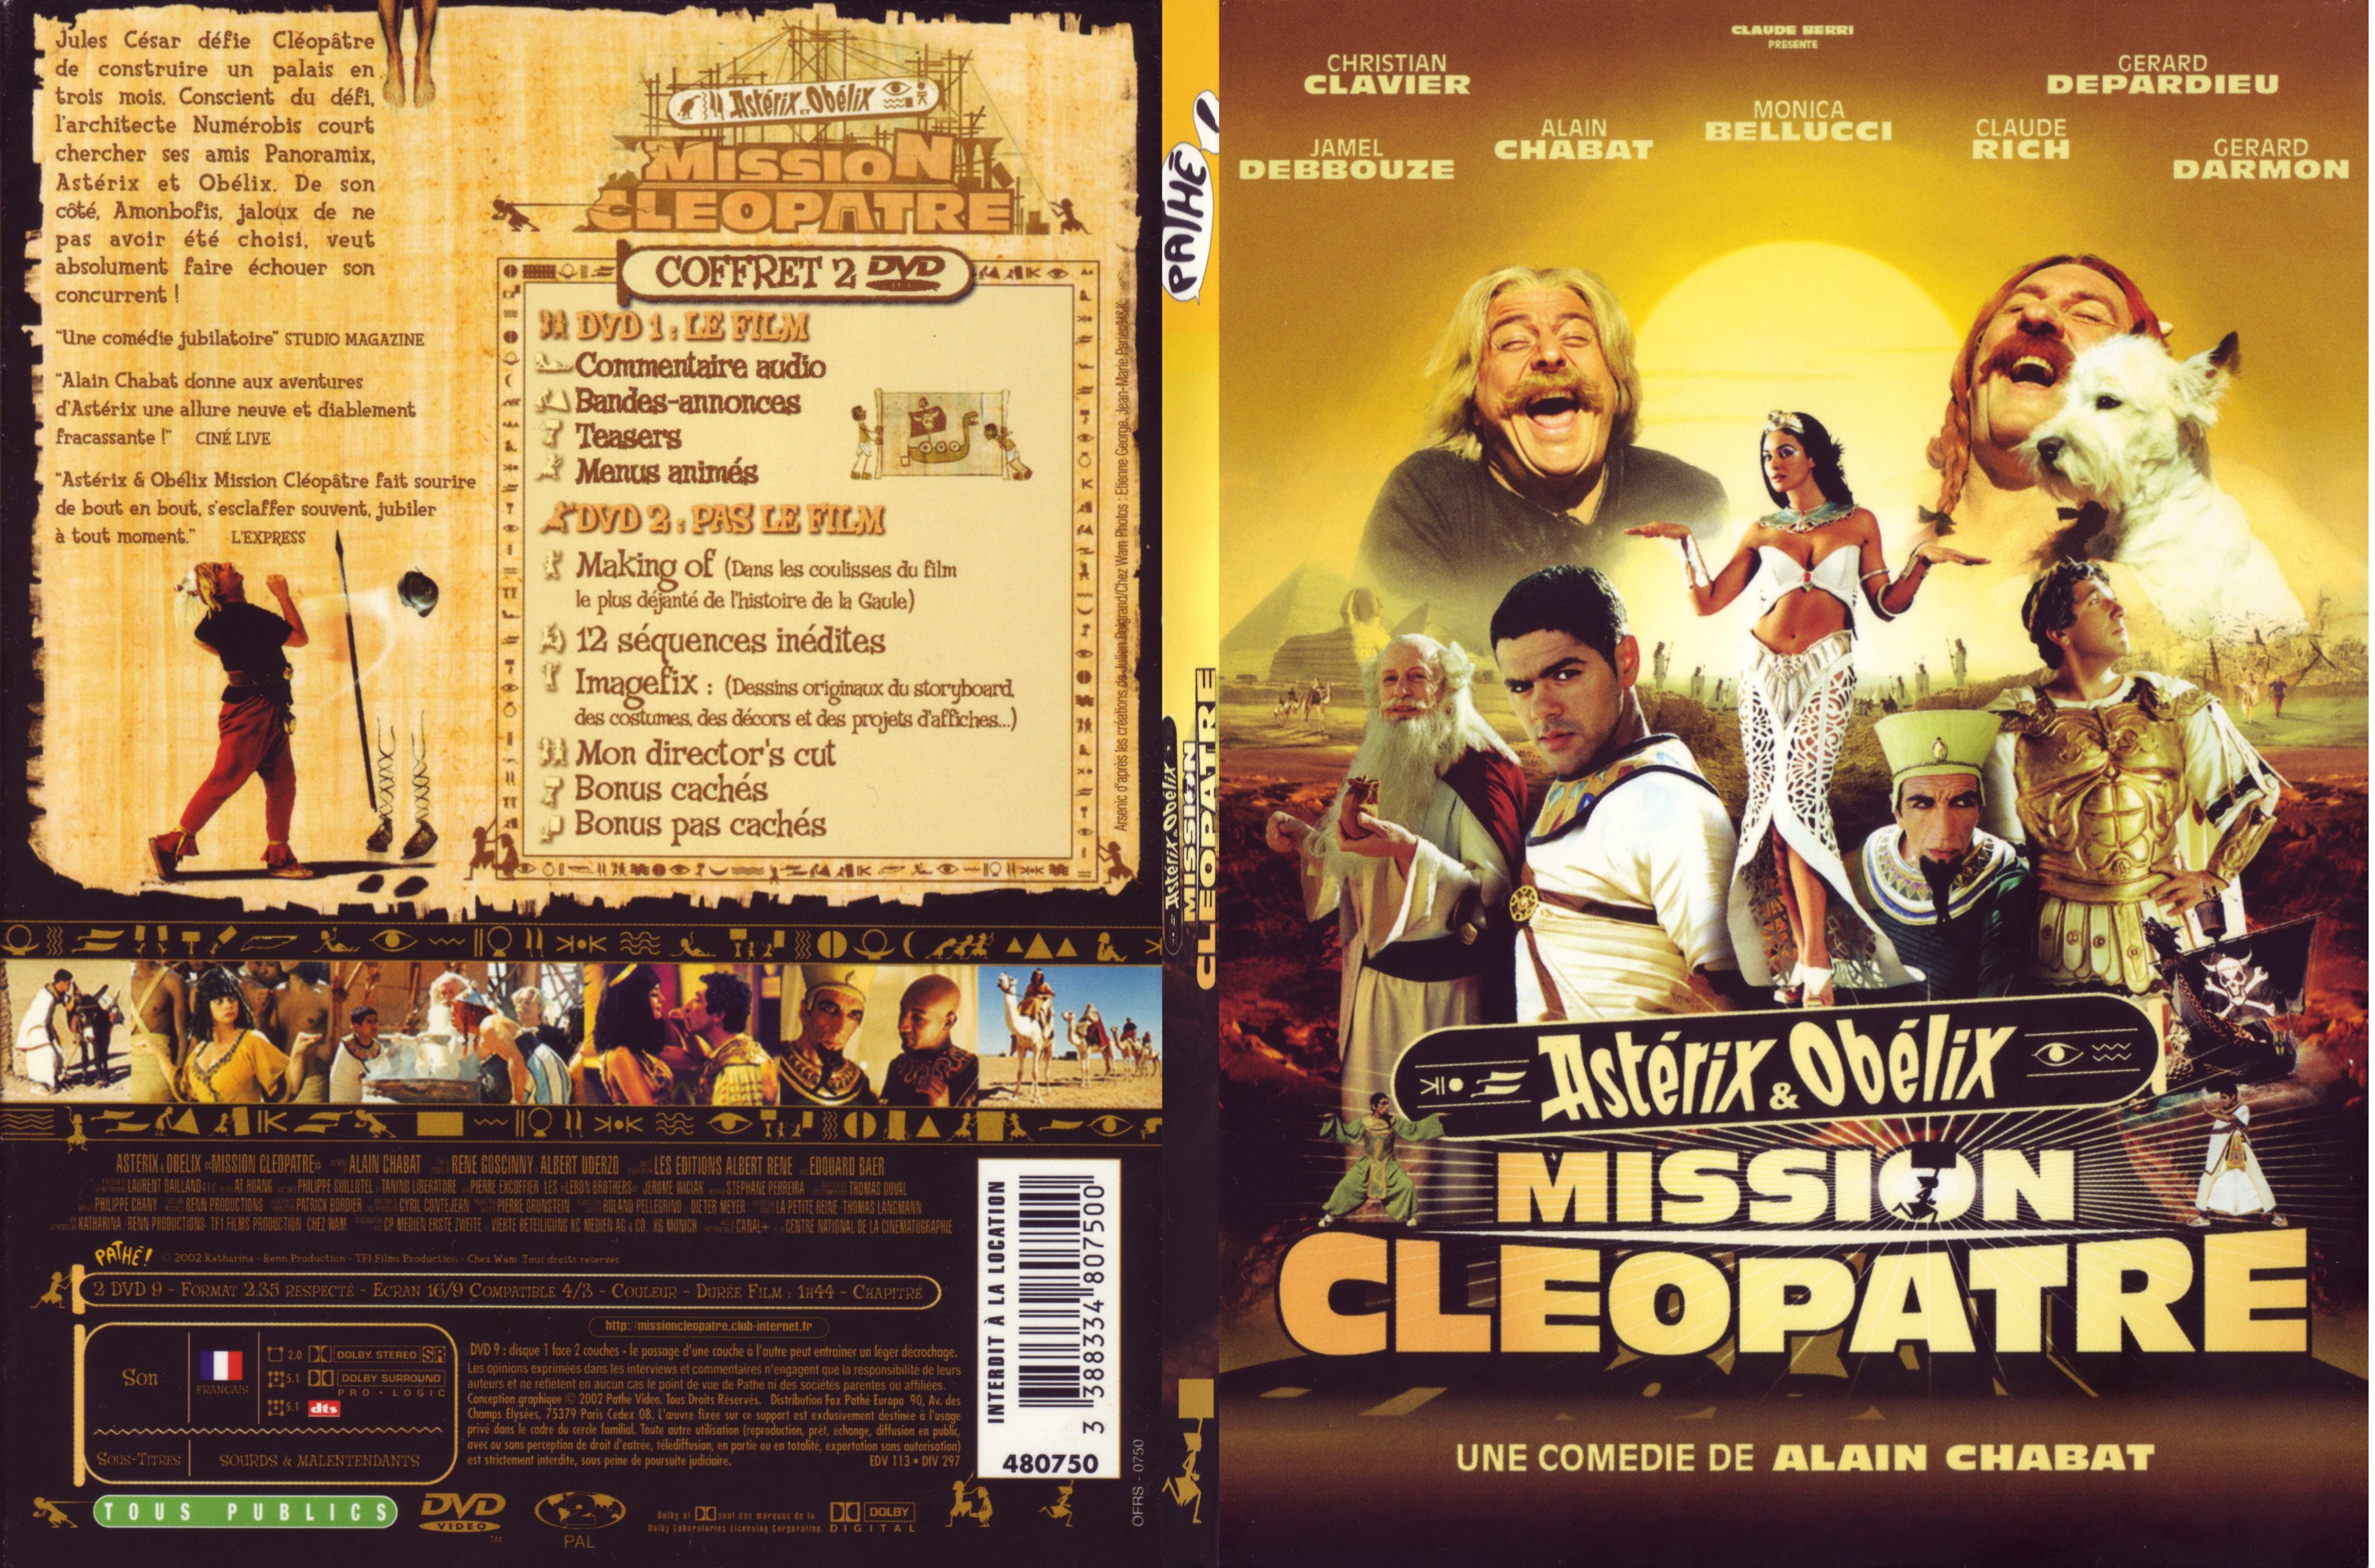 Jaquette DVD Astrix et Oblix Mission Clopatre - SLIM v2